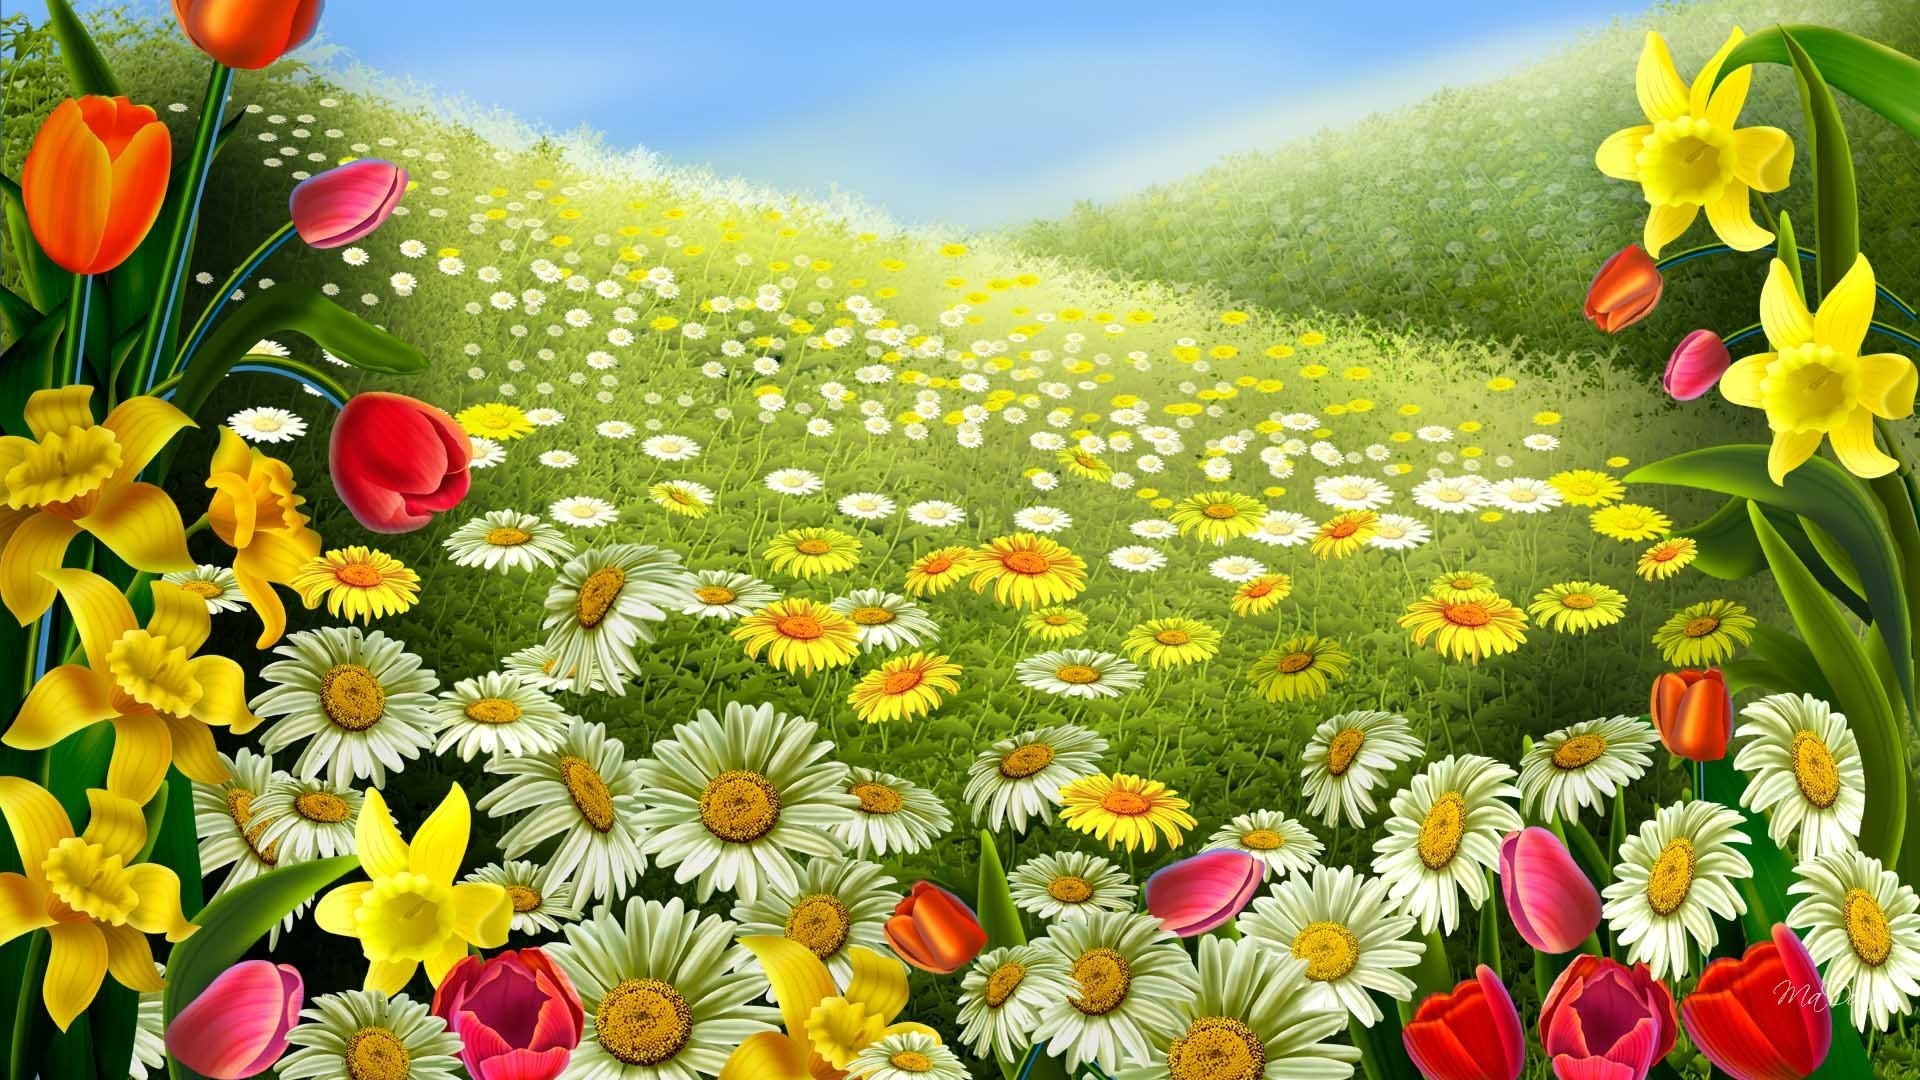 1920x1080  Great Spring Nature Wallpaper Desktop